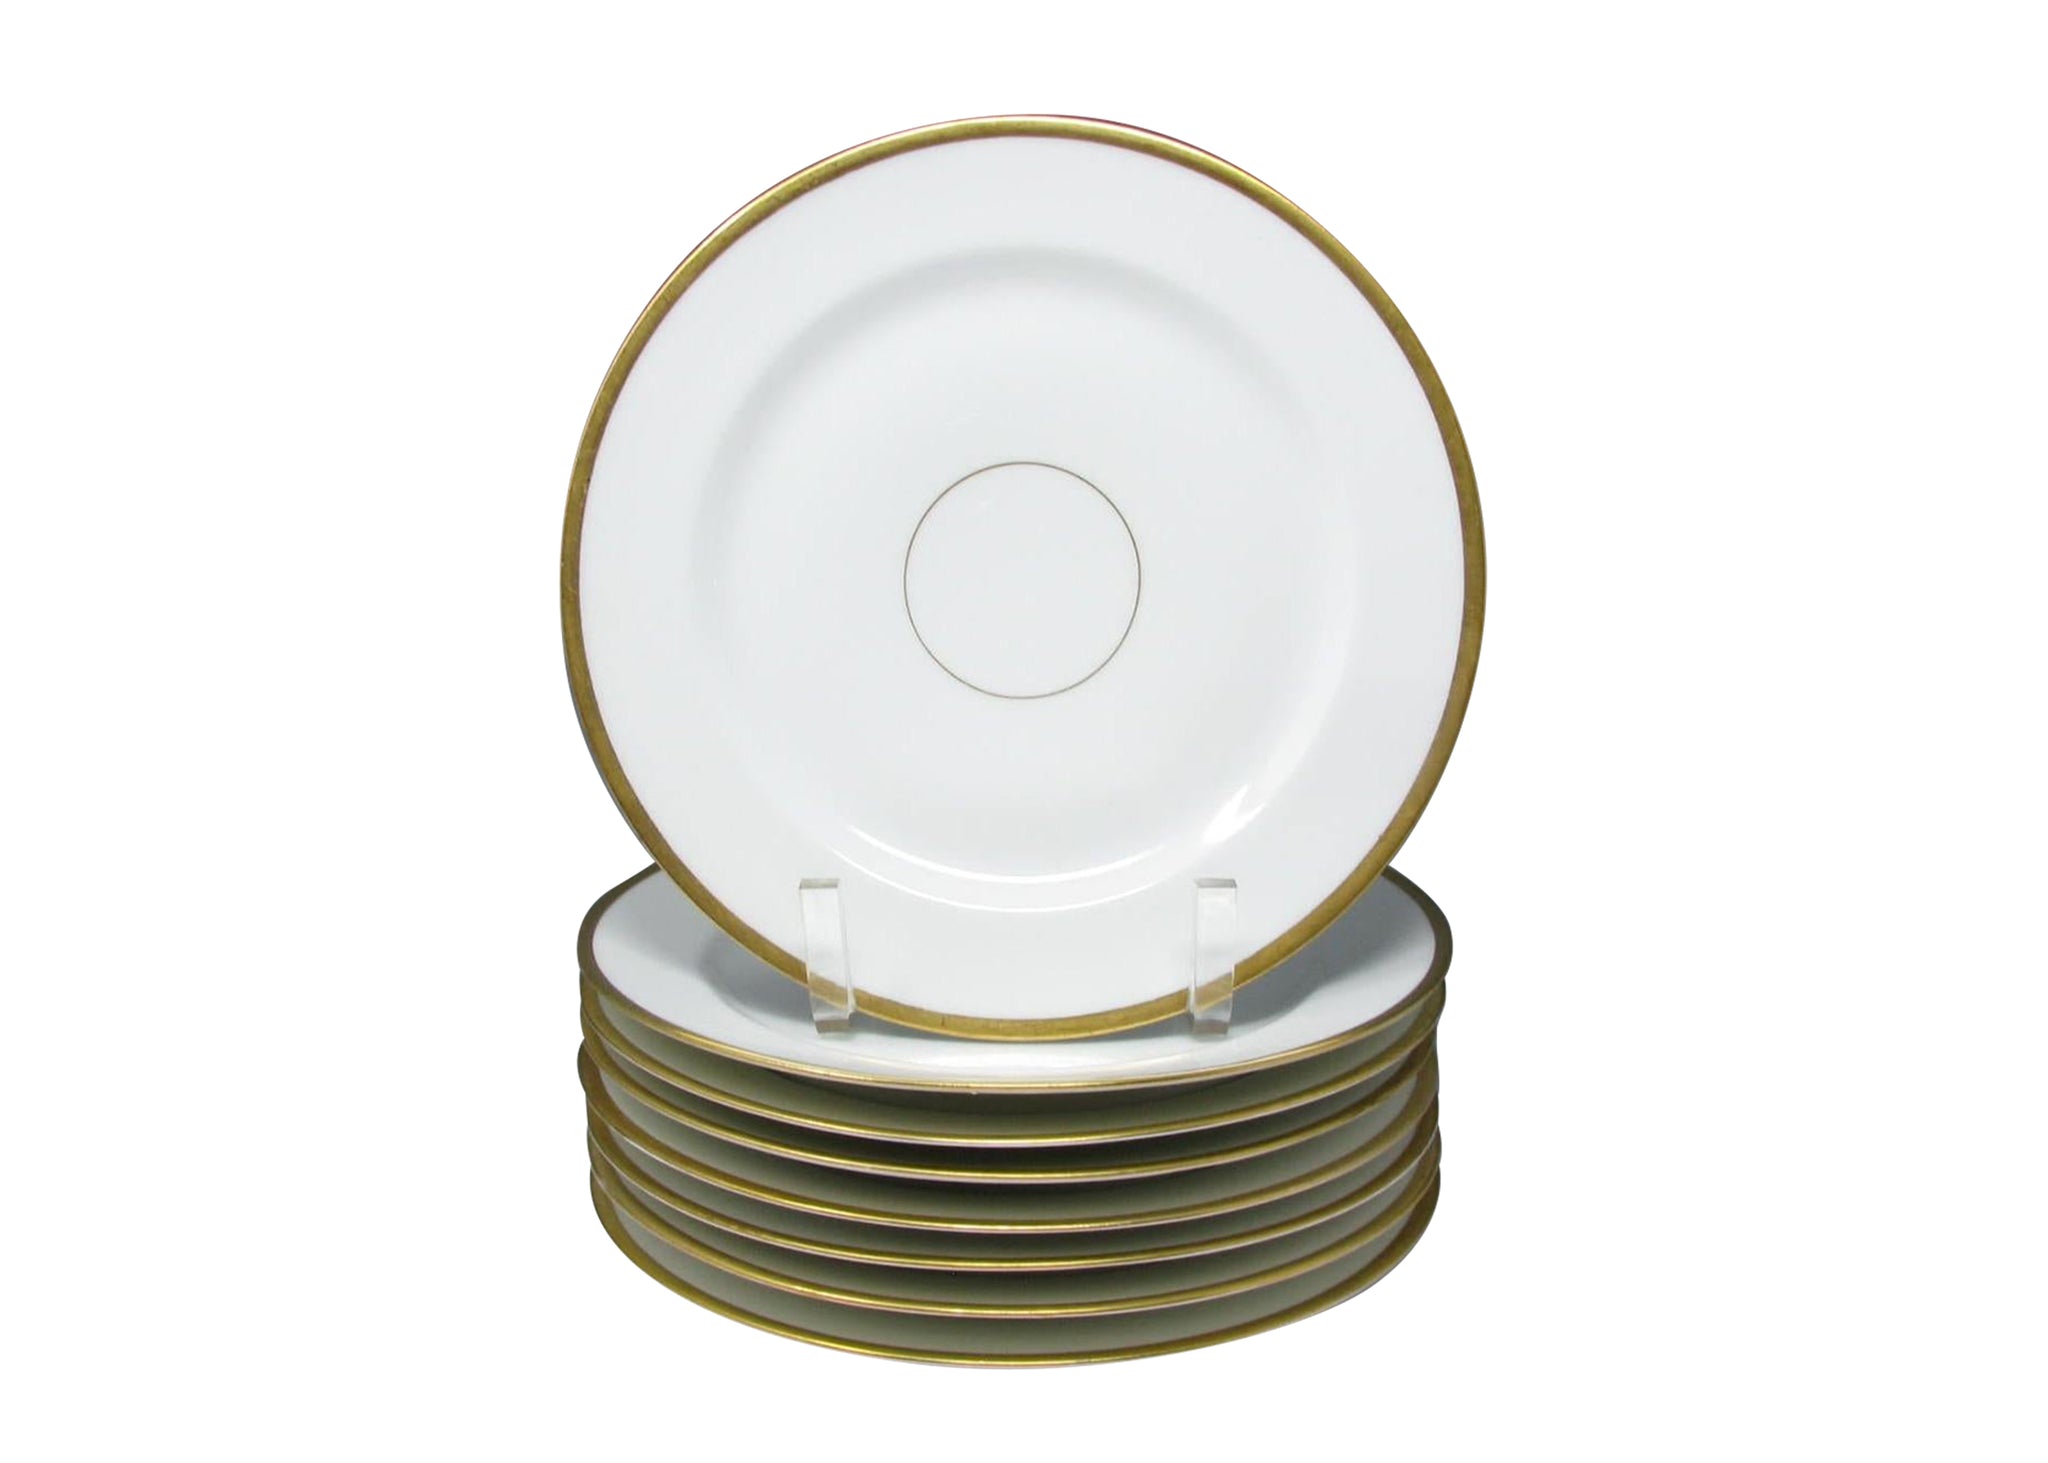 edgebrookhouse - Antique Haviland Limoges Porcelain Gold Wedding Ring Luncheon or Salad Plates - 8 Pieces